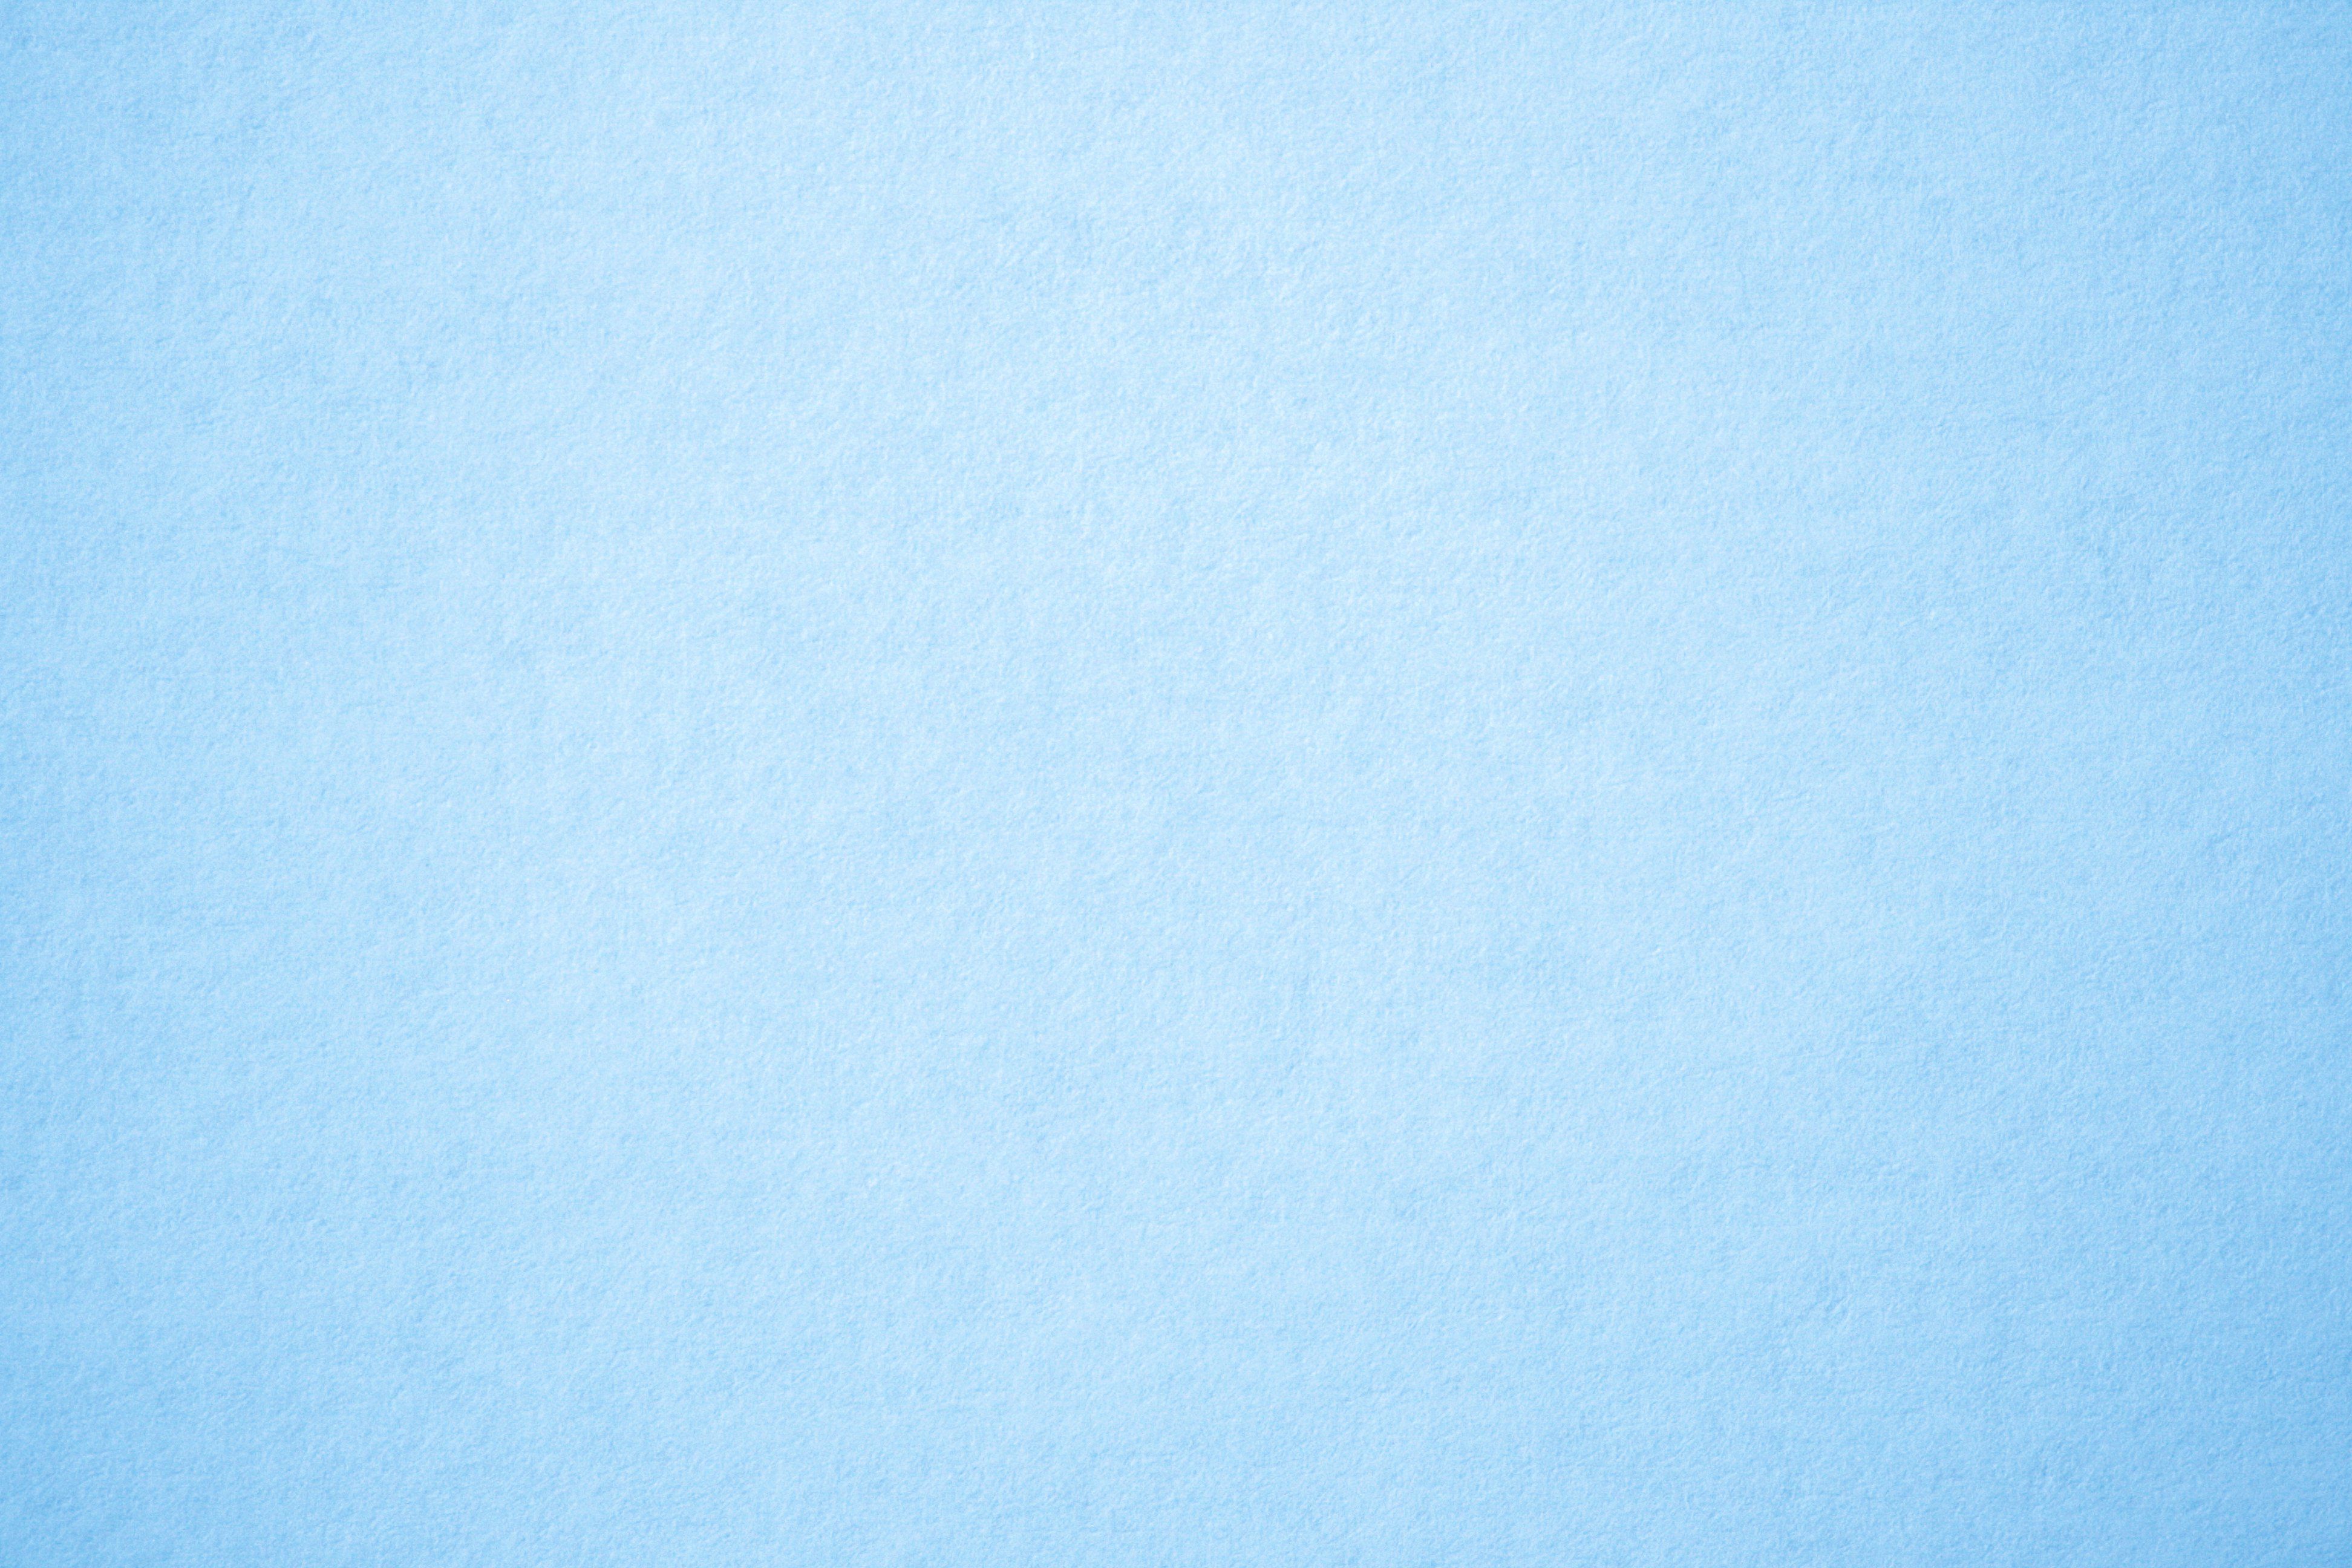 Baby Blue Paper Texture Picture. Free Photograph. Photo Public Domain